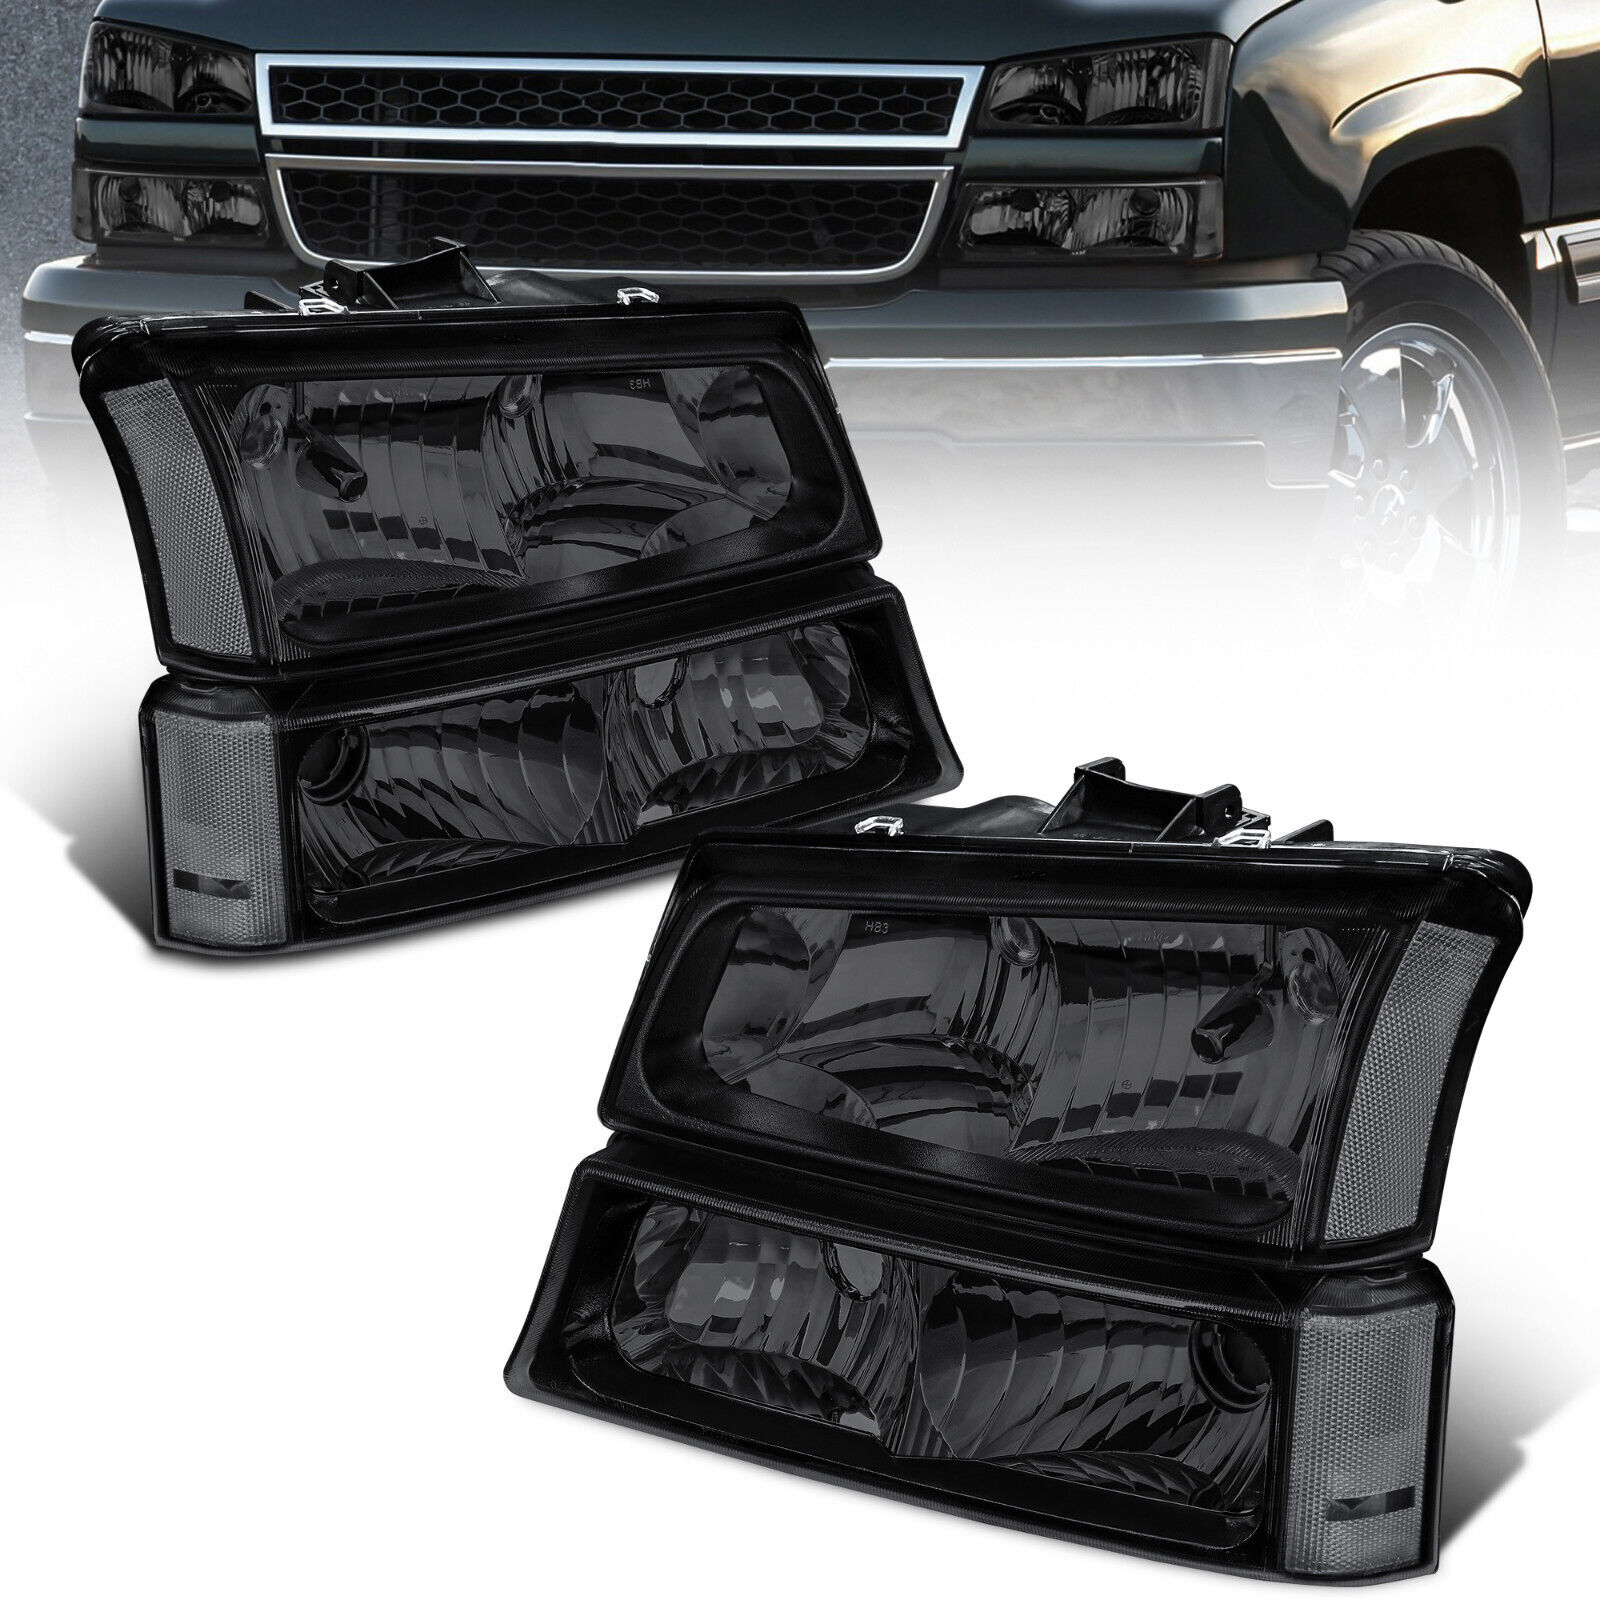 2X Smoke Headlights Assembly For 2003-2006 Chevy Silverado 1500 HD 2500 HD 3500